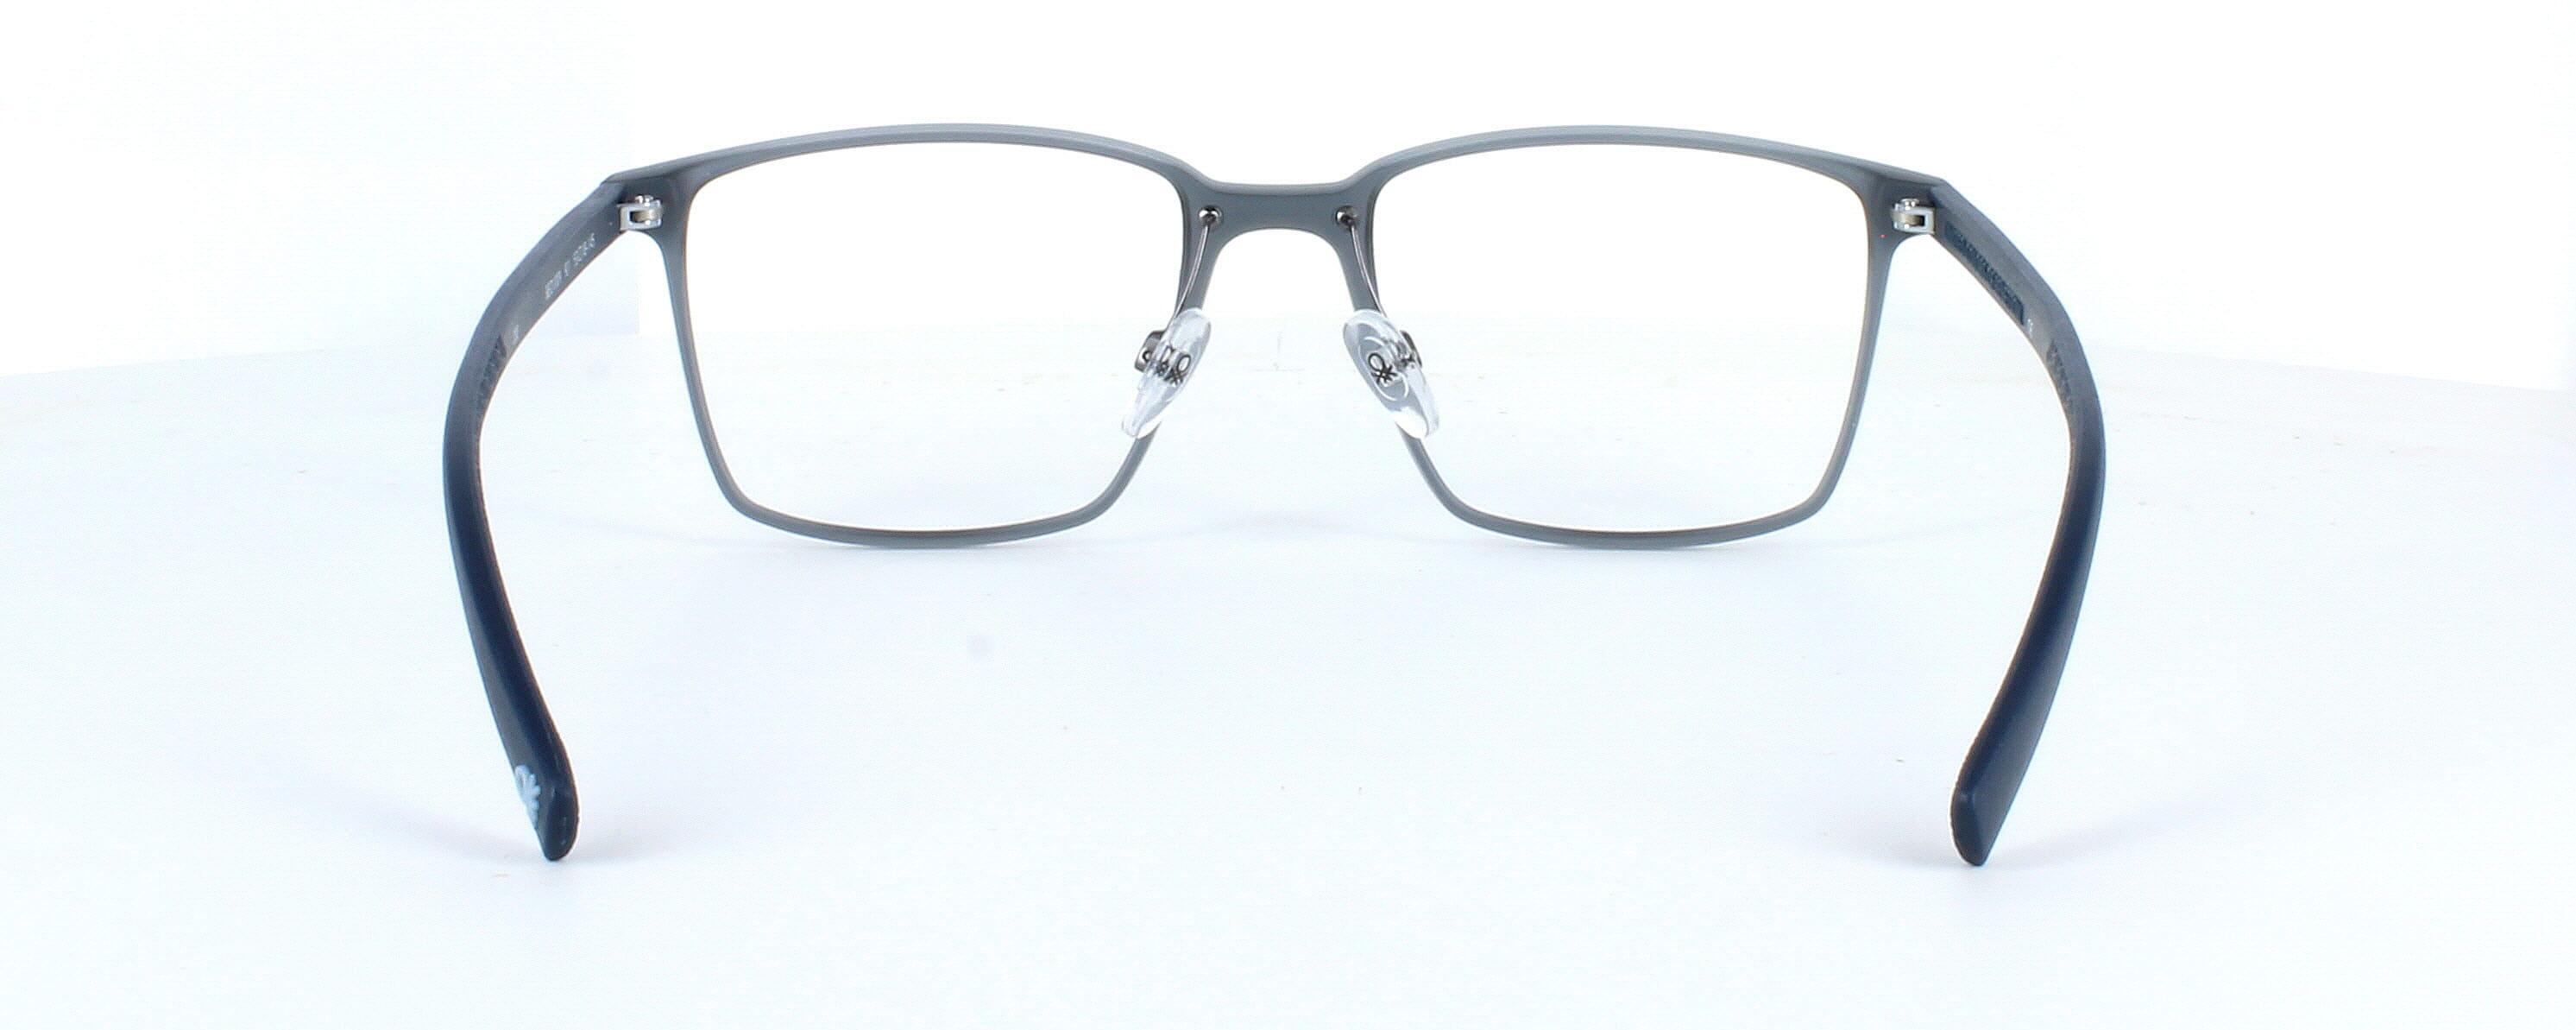 Benetton BEO1009 921 - Gent's matt crystal grey rectangular shaped glasses frame - image view 4